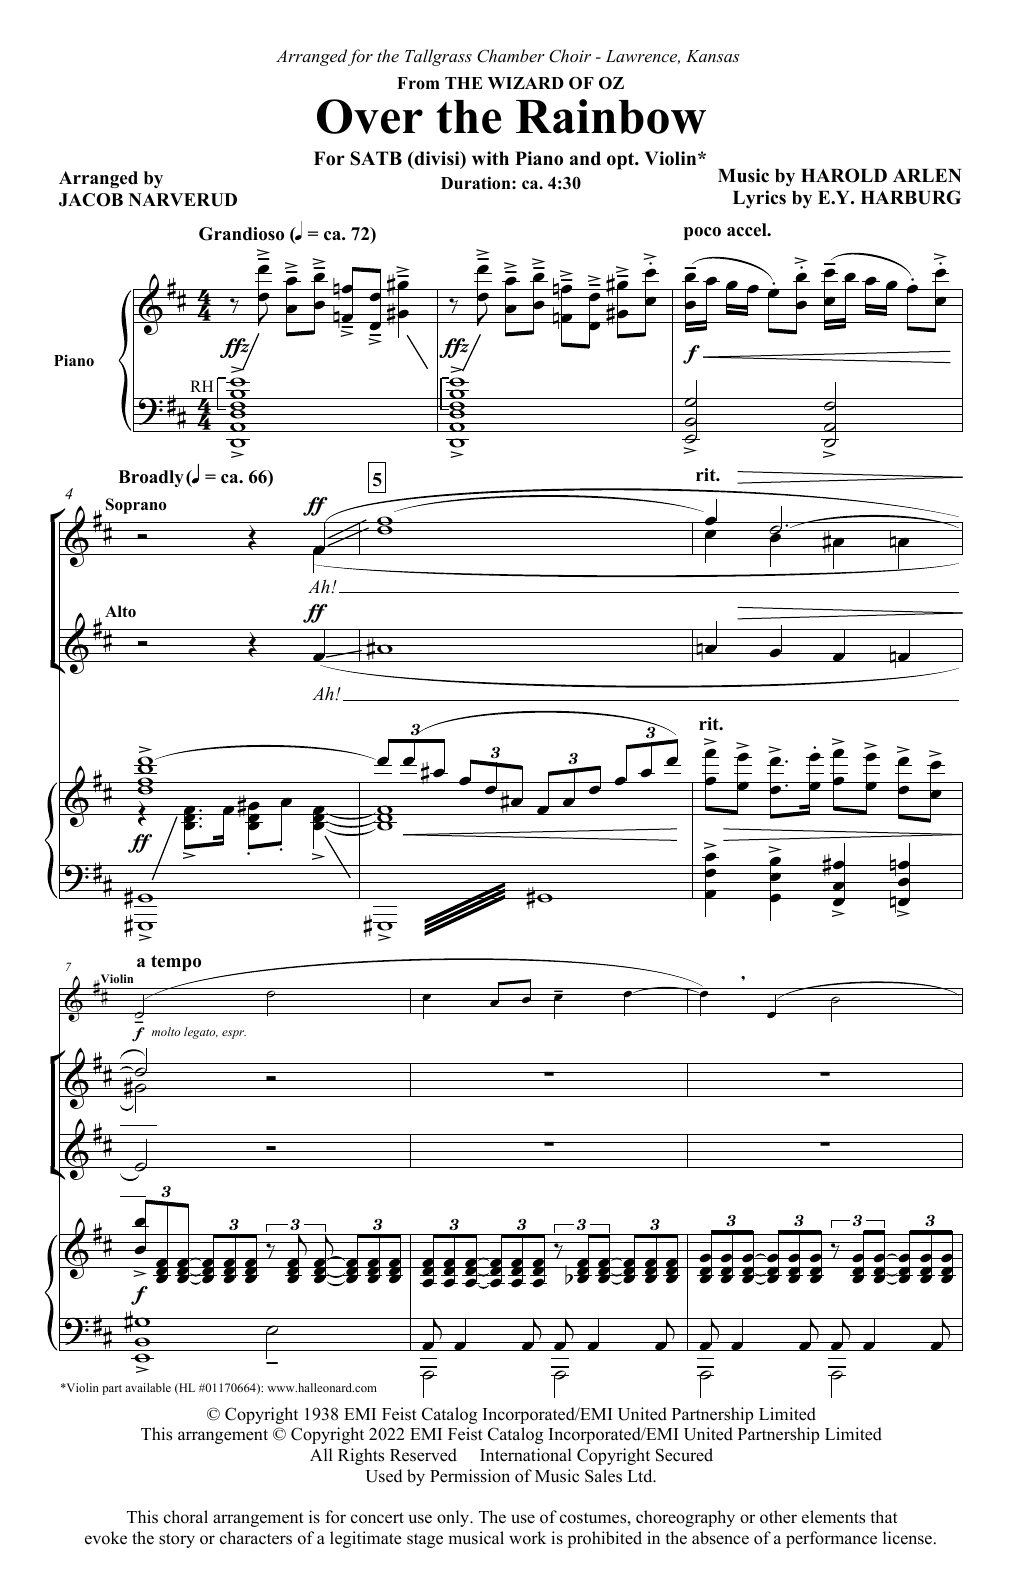 Harold Arlen & E.Y. Harburg Over The Rainbow (arr. Jacob Narverud) Sheet Music Notes & Chords for Choir - Download or Print PDF